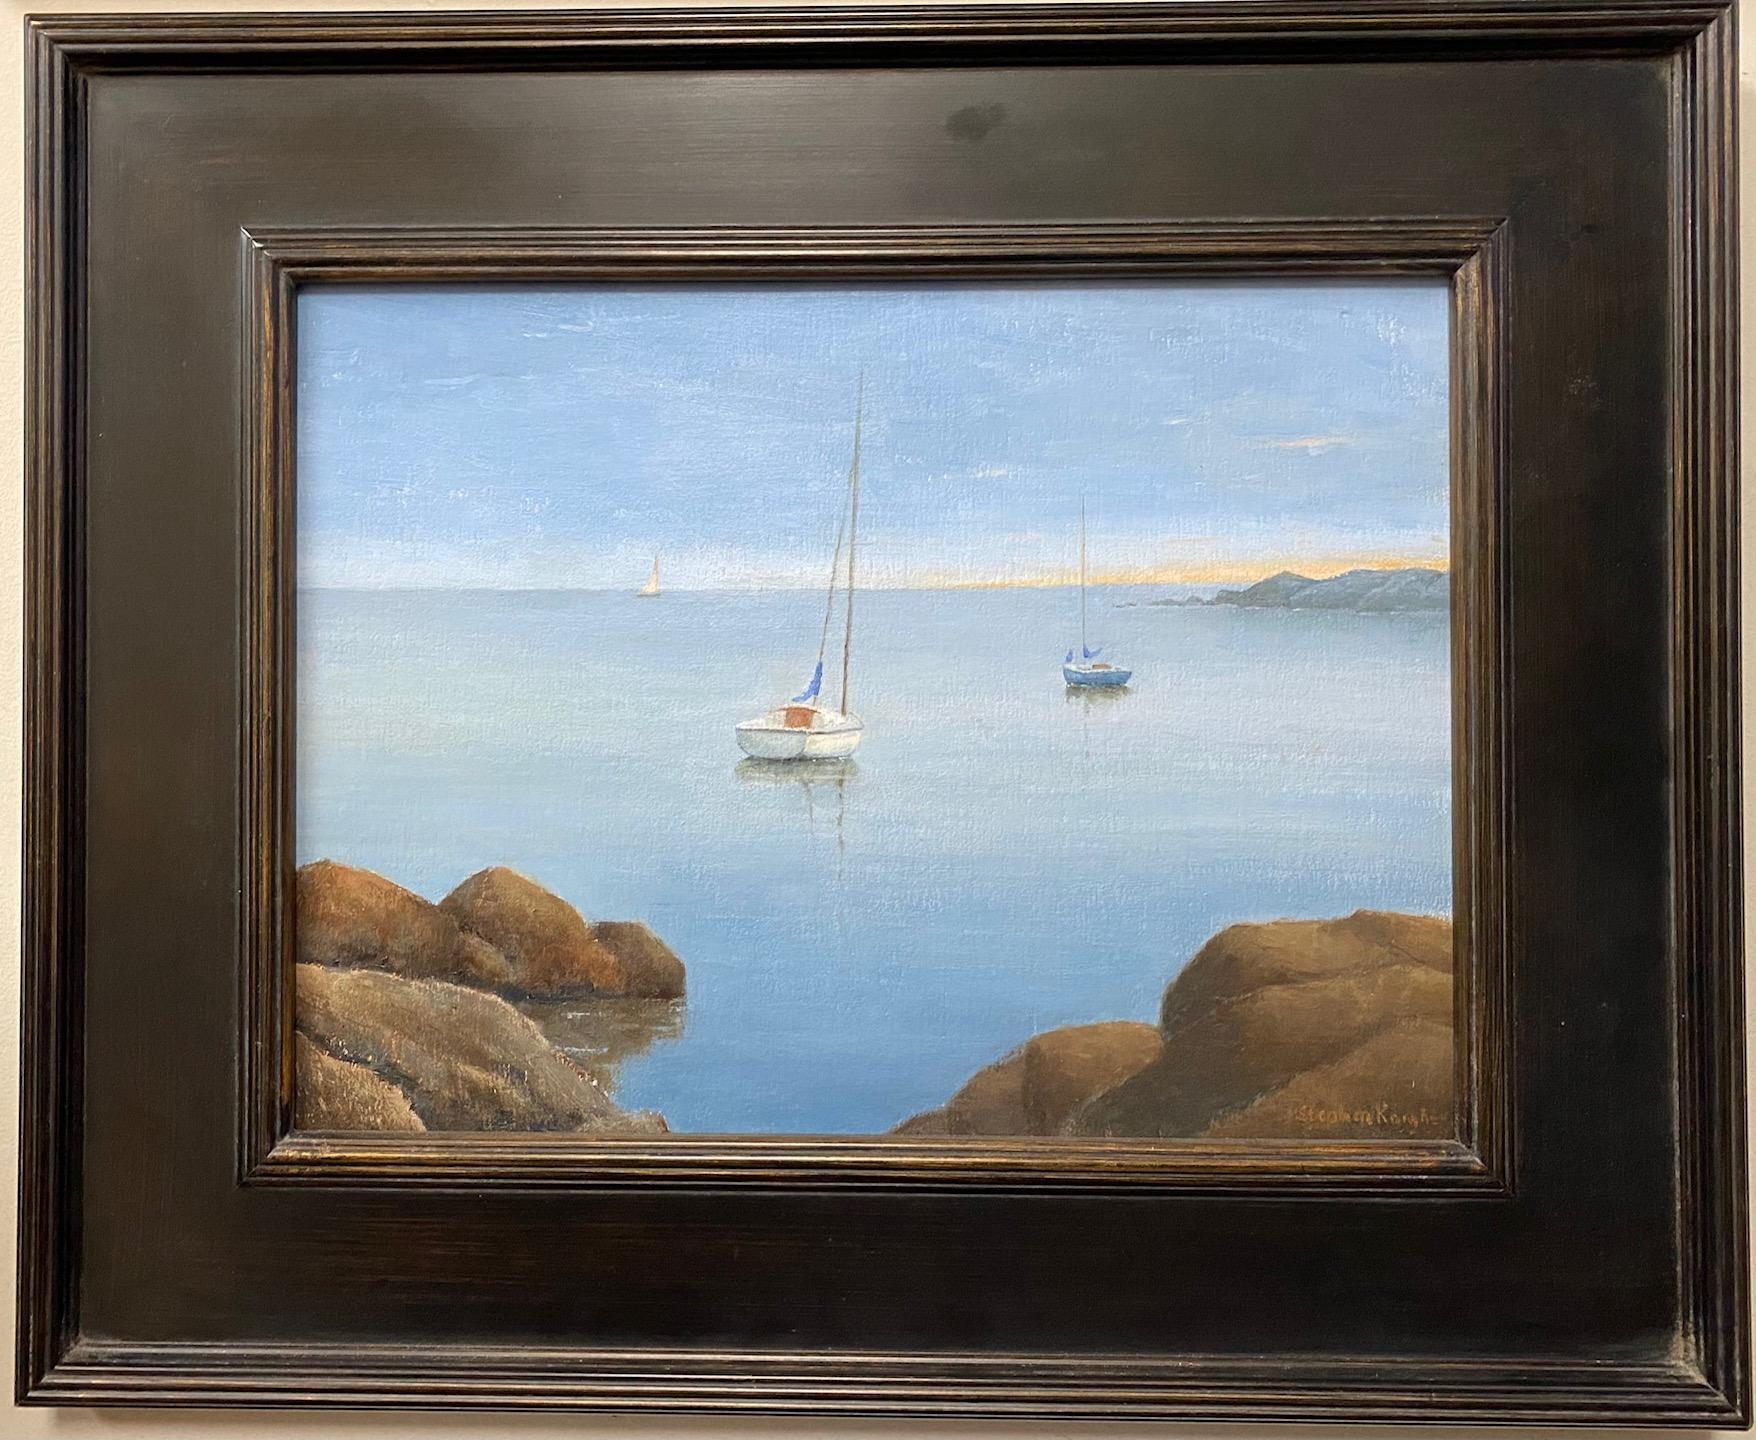 Stephen Knight Landscape Painting - Morning Calm, original impressionist marine landscape